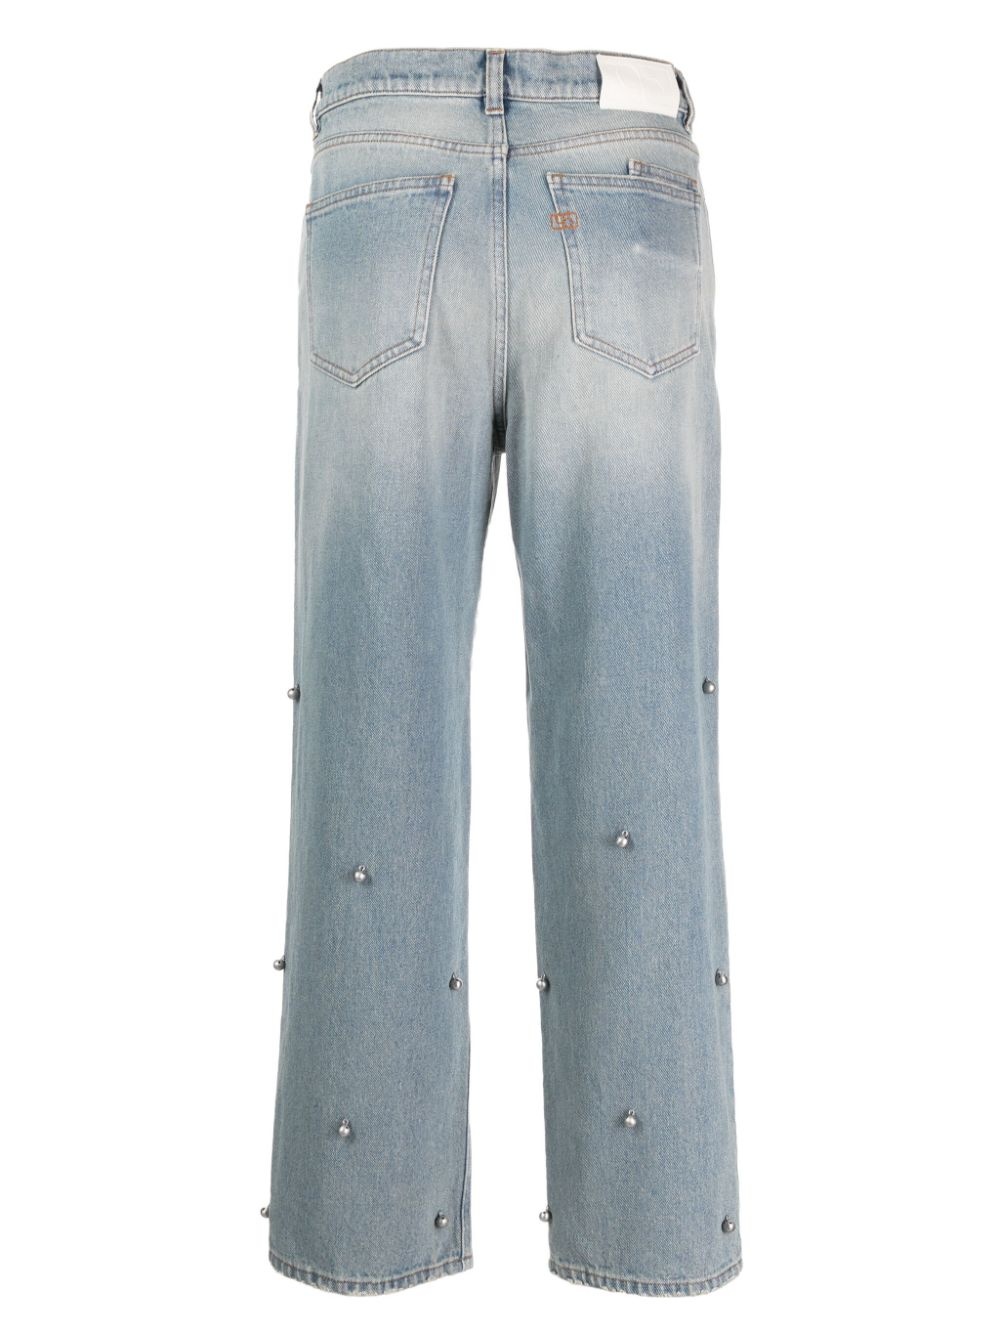 bell-emgellished indigo-wash jeans - 2